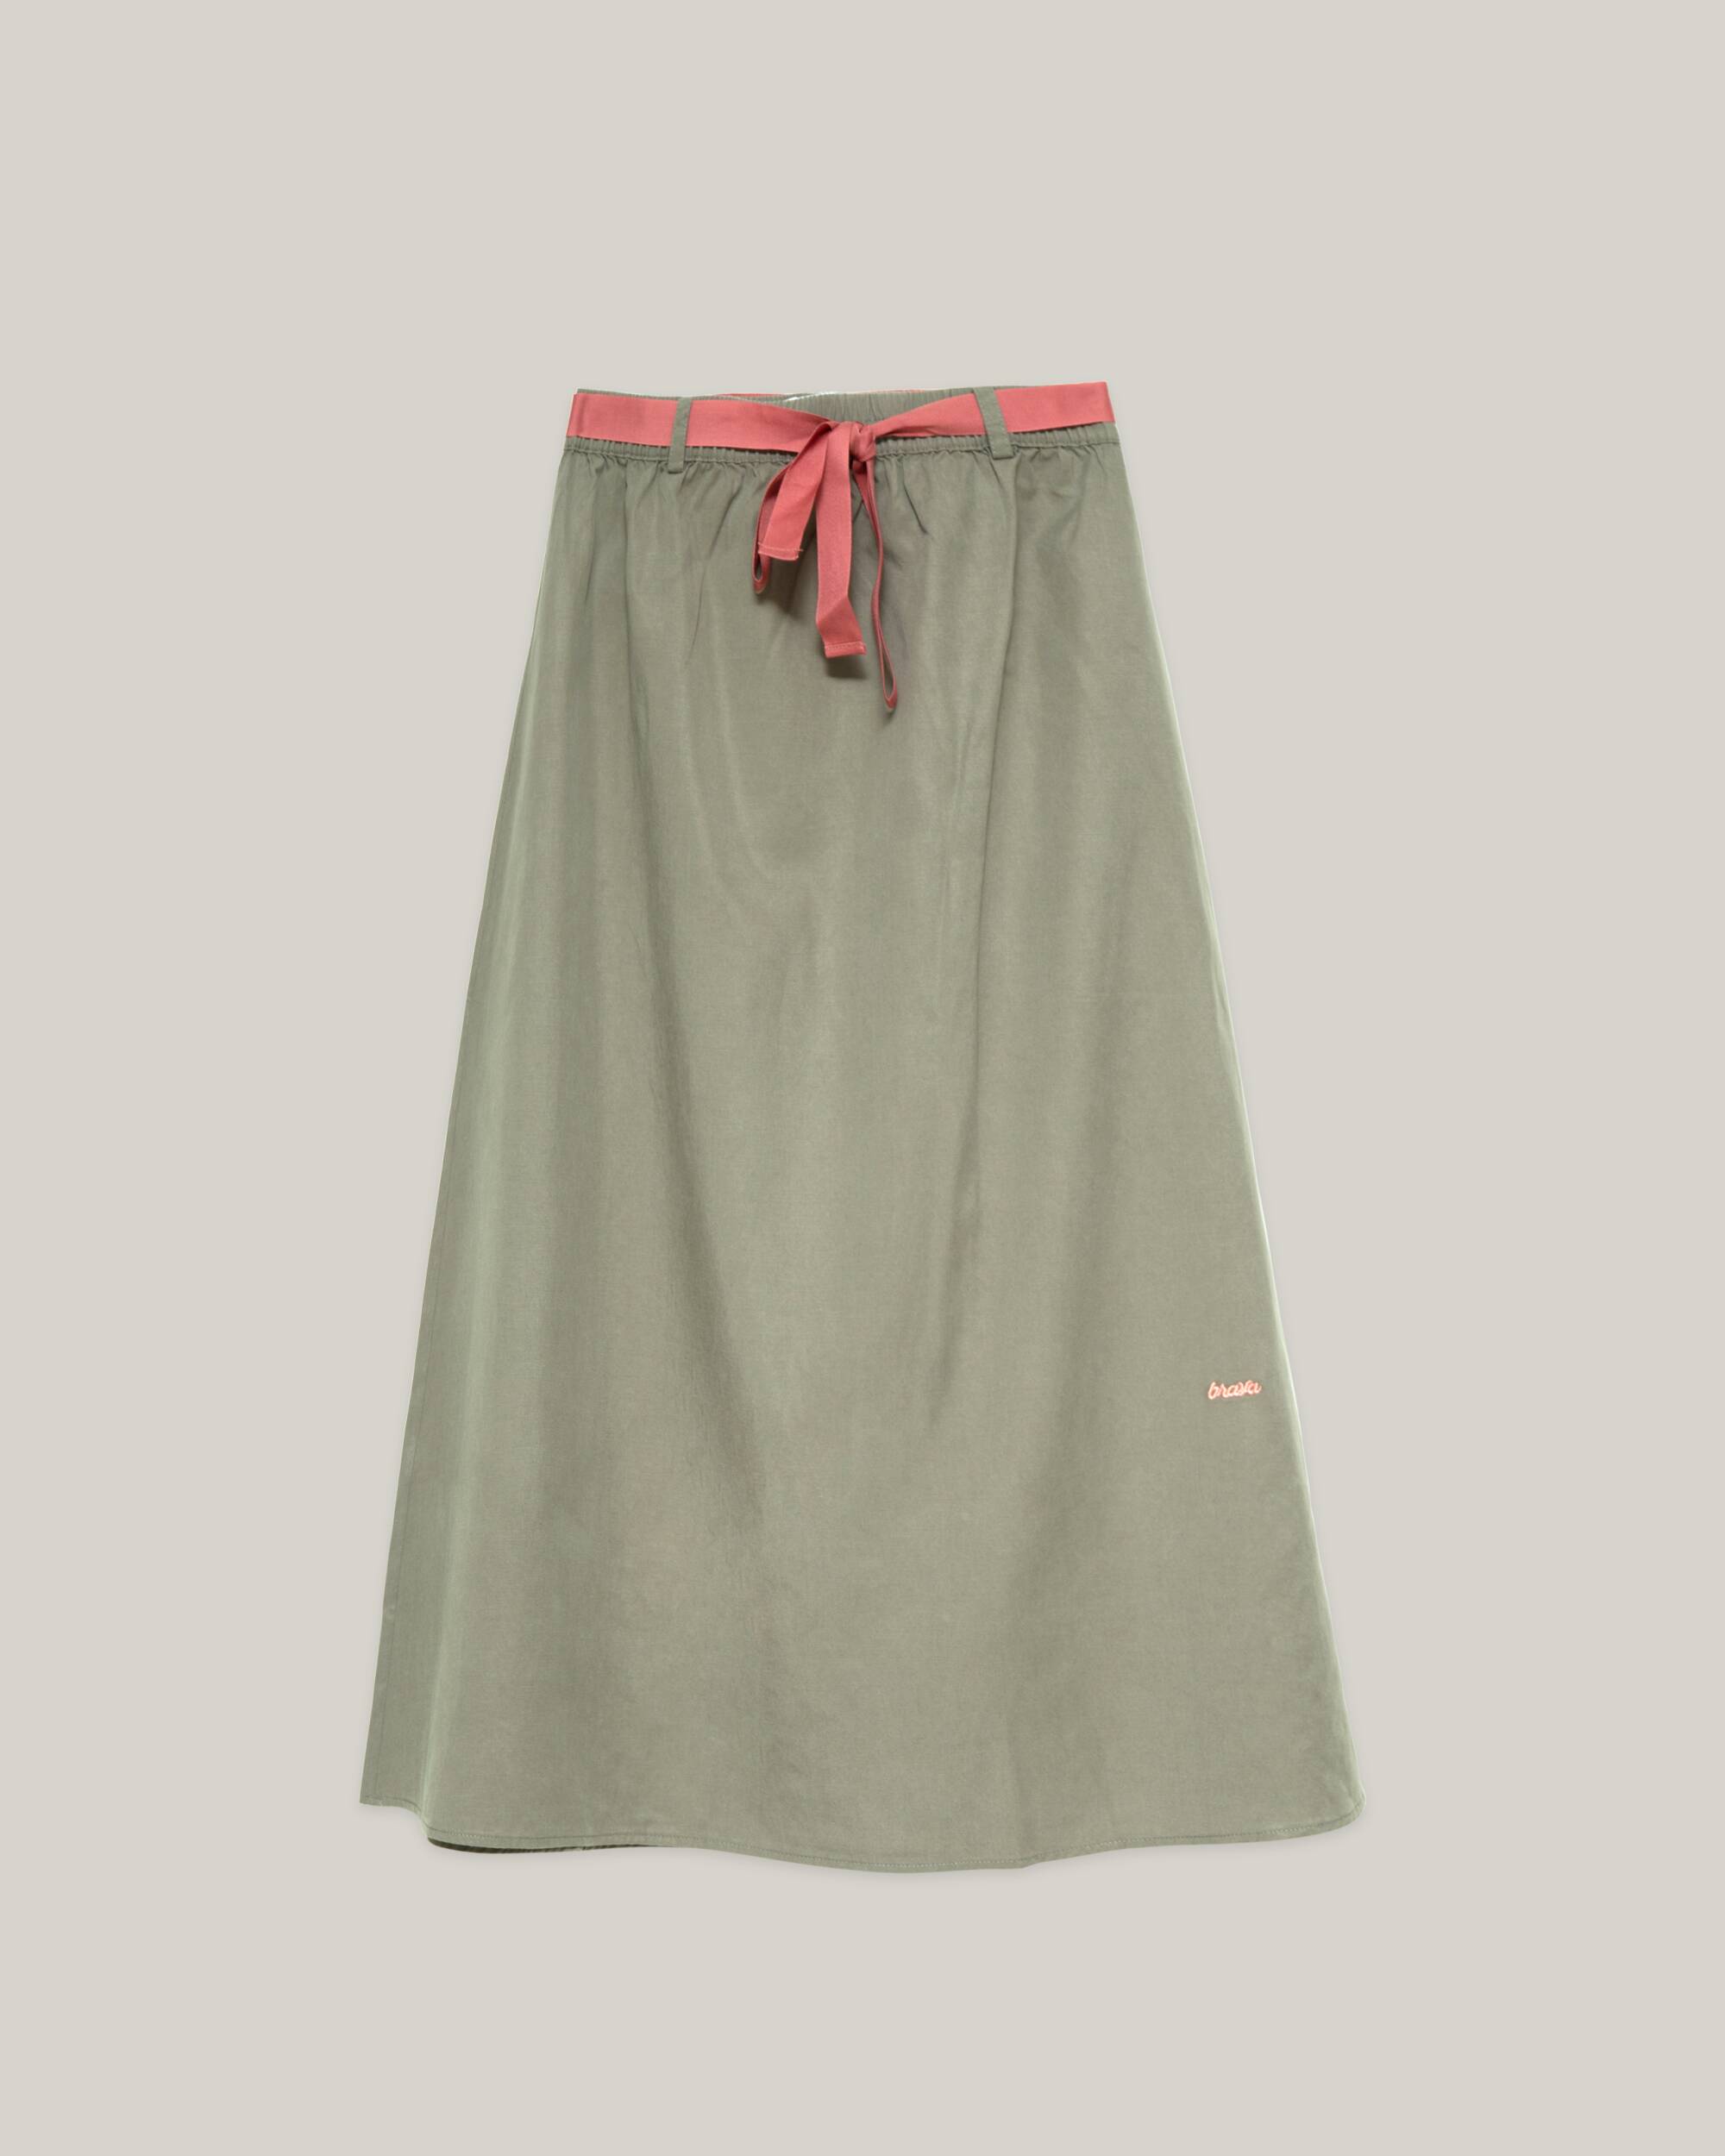 Green Elba skirt made of Tencel, organic cotton and Euro flax linen from Brava Fabrics